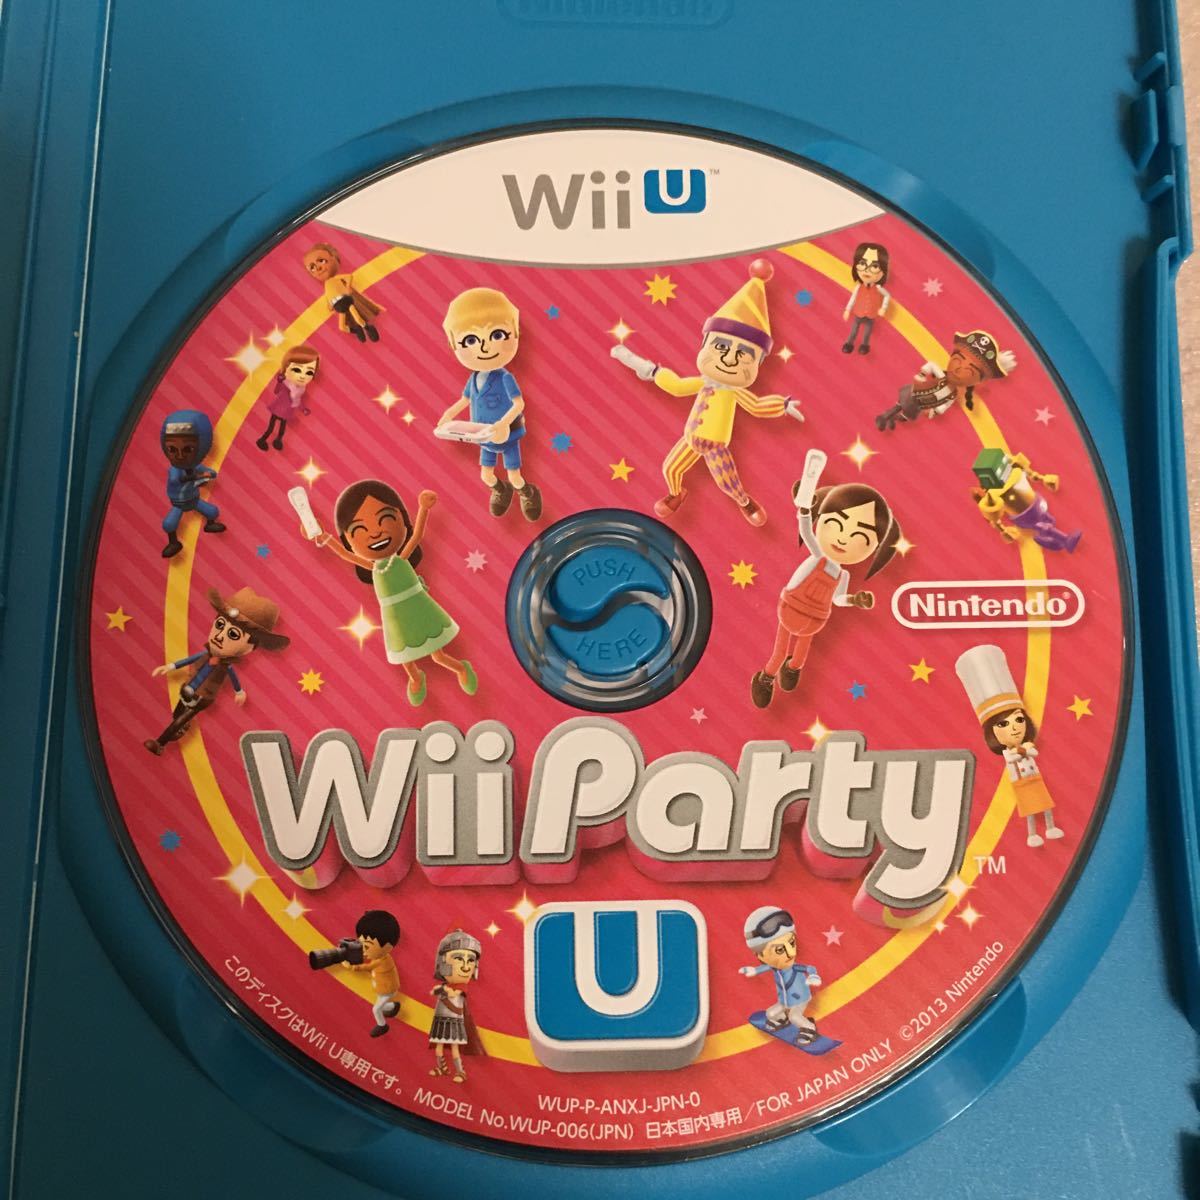 WiiU Wii Party U WiiパーティU